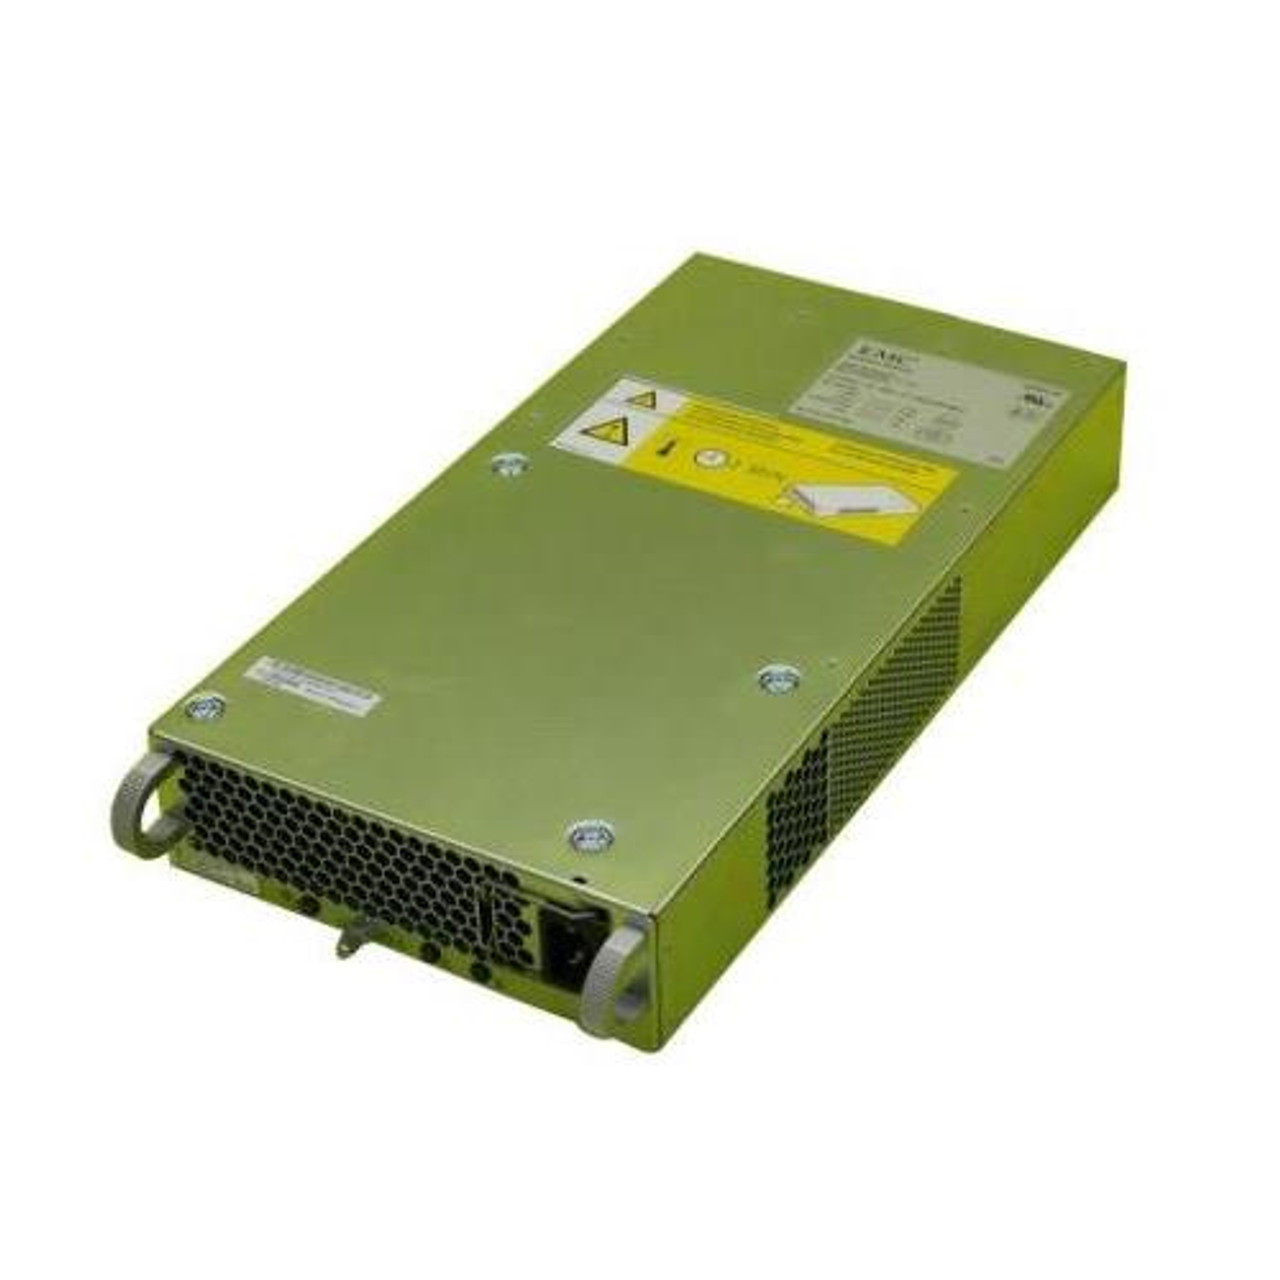 071-000-475 EMC 12V Dual Power Supply for CLARiiON